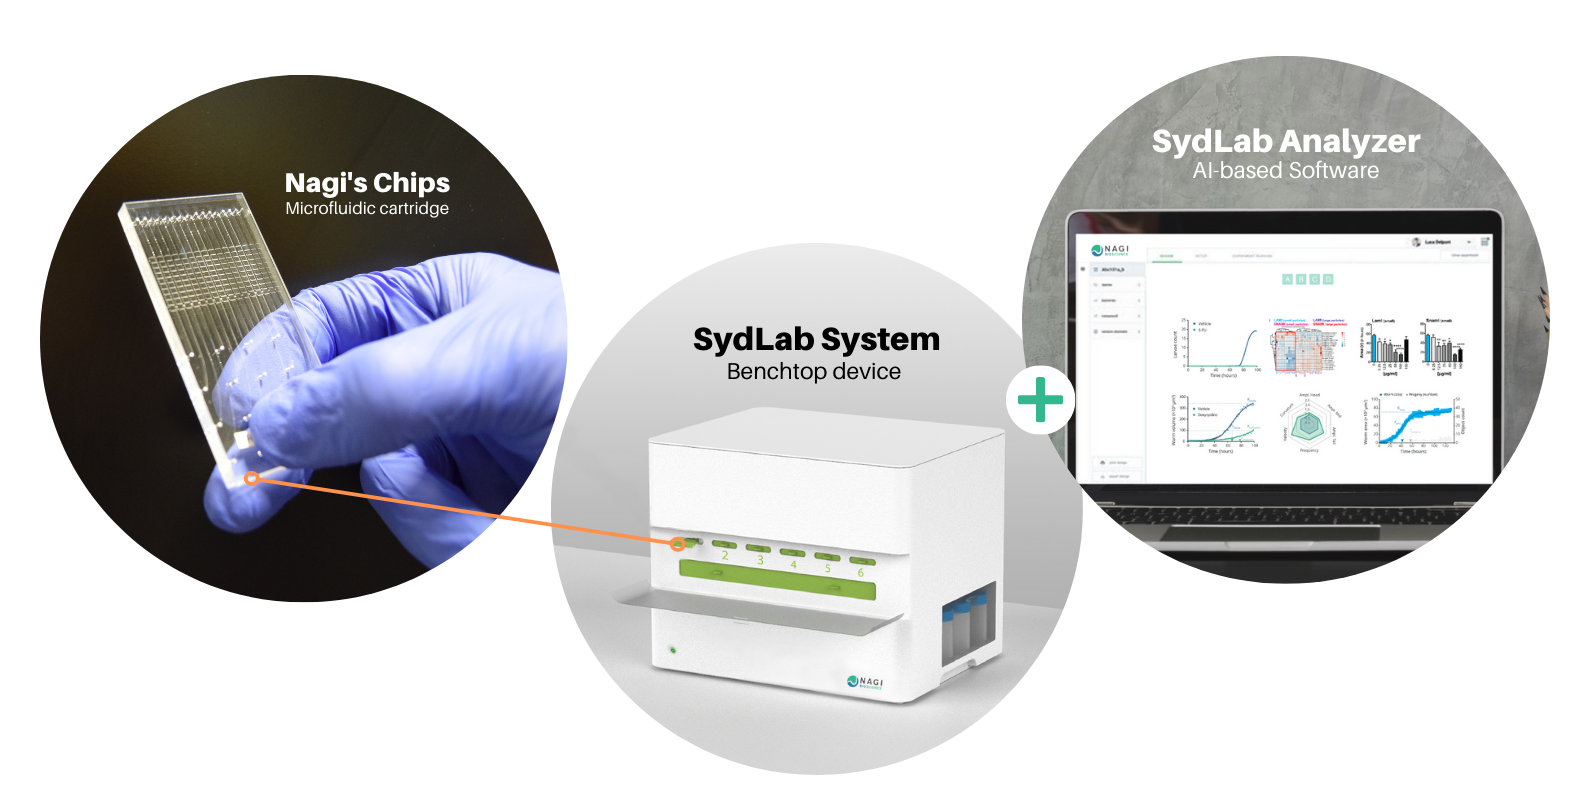 SydLab System by Nagi Bioscience Alternative Testing Market Overview